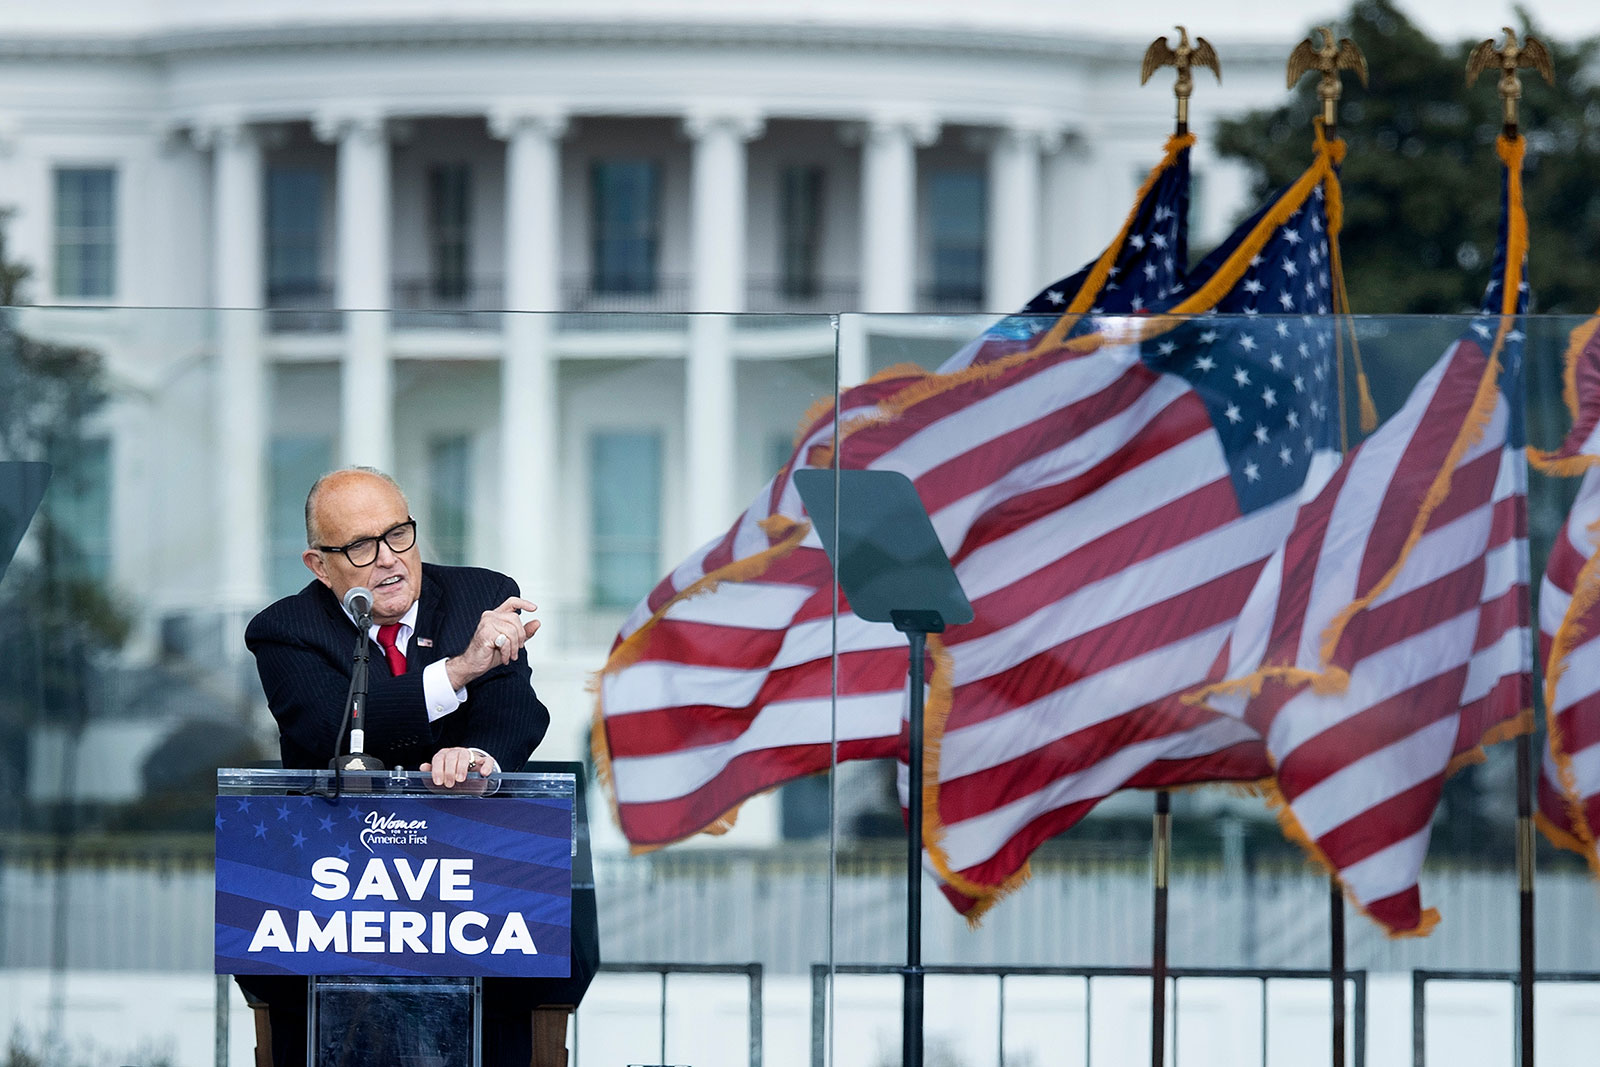 Rudy Giuliani speaks at the Trump rally on January 6, 2021.